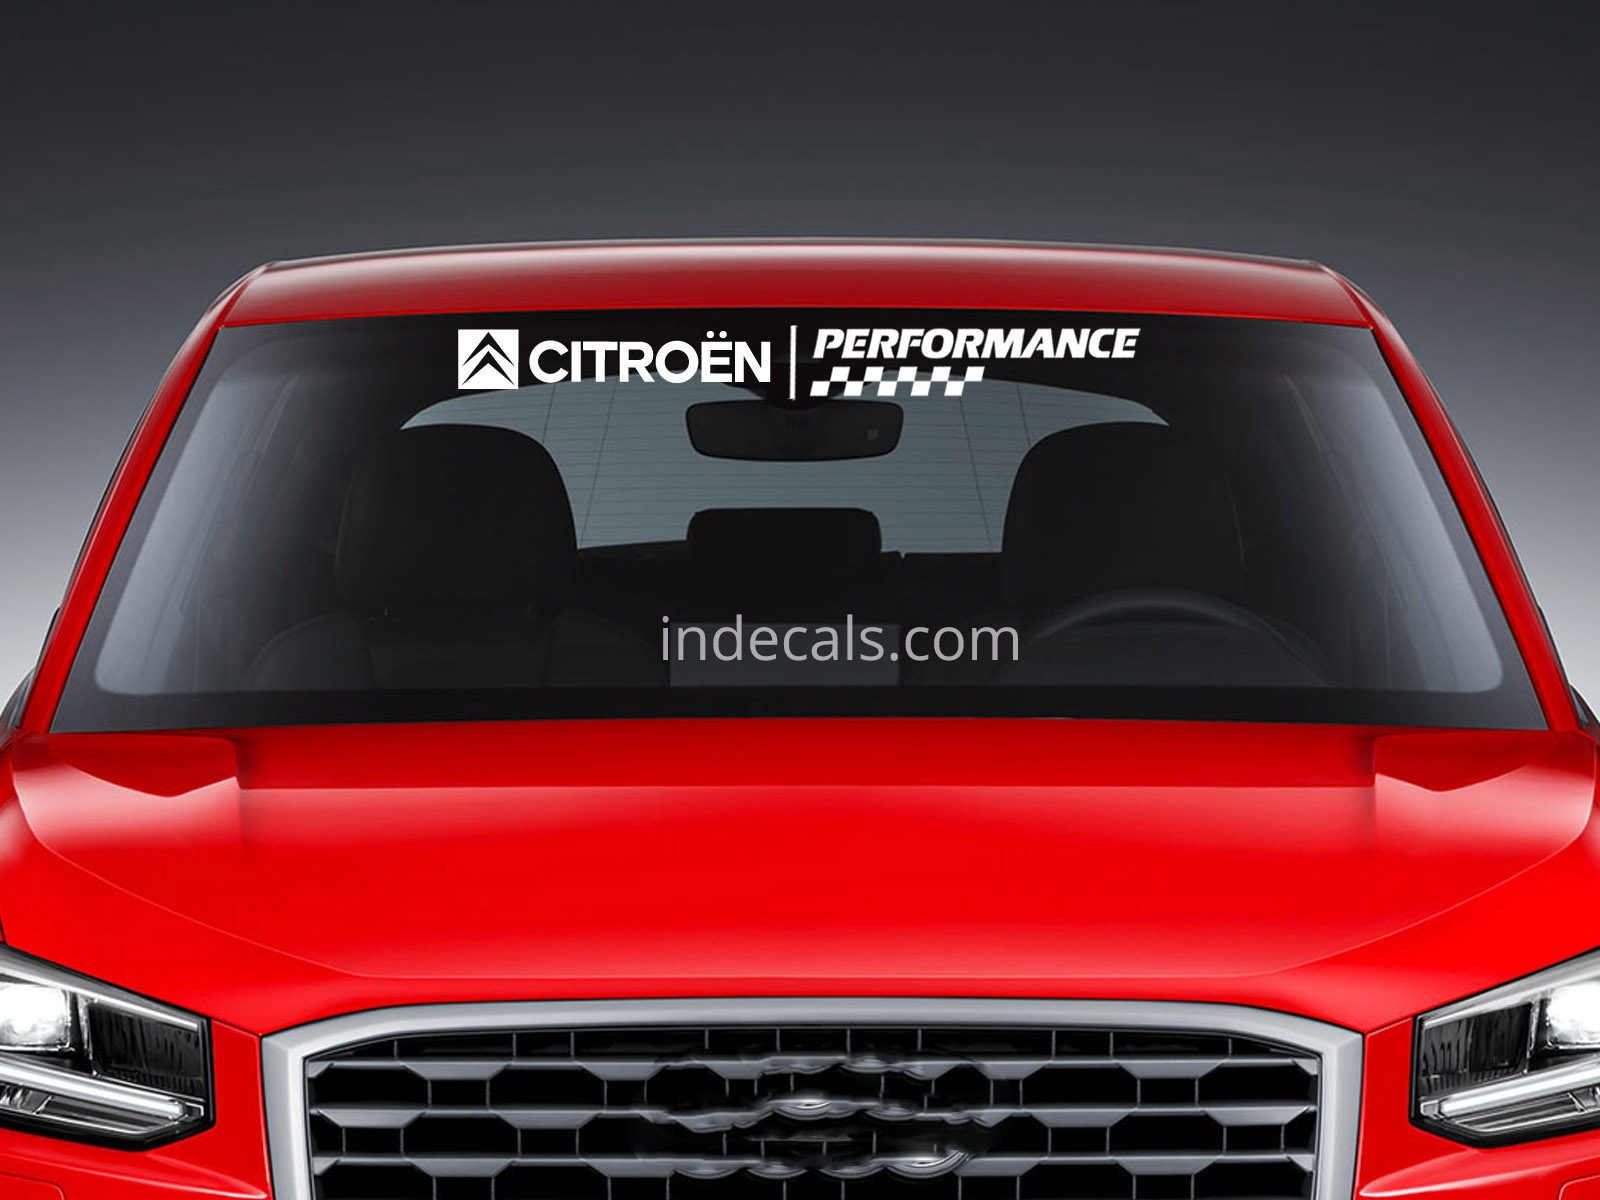 1 x Citroen Performance Sticker for Windshield or Back Window - White